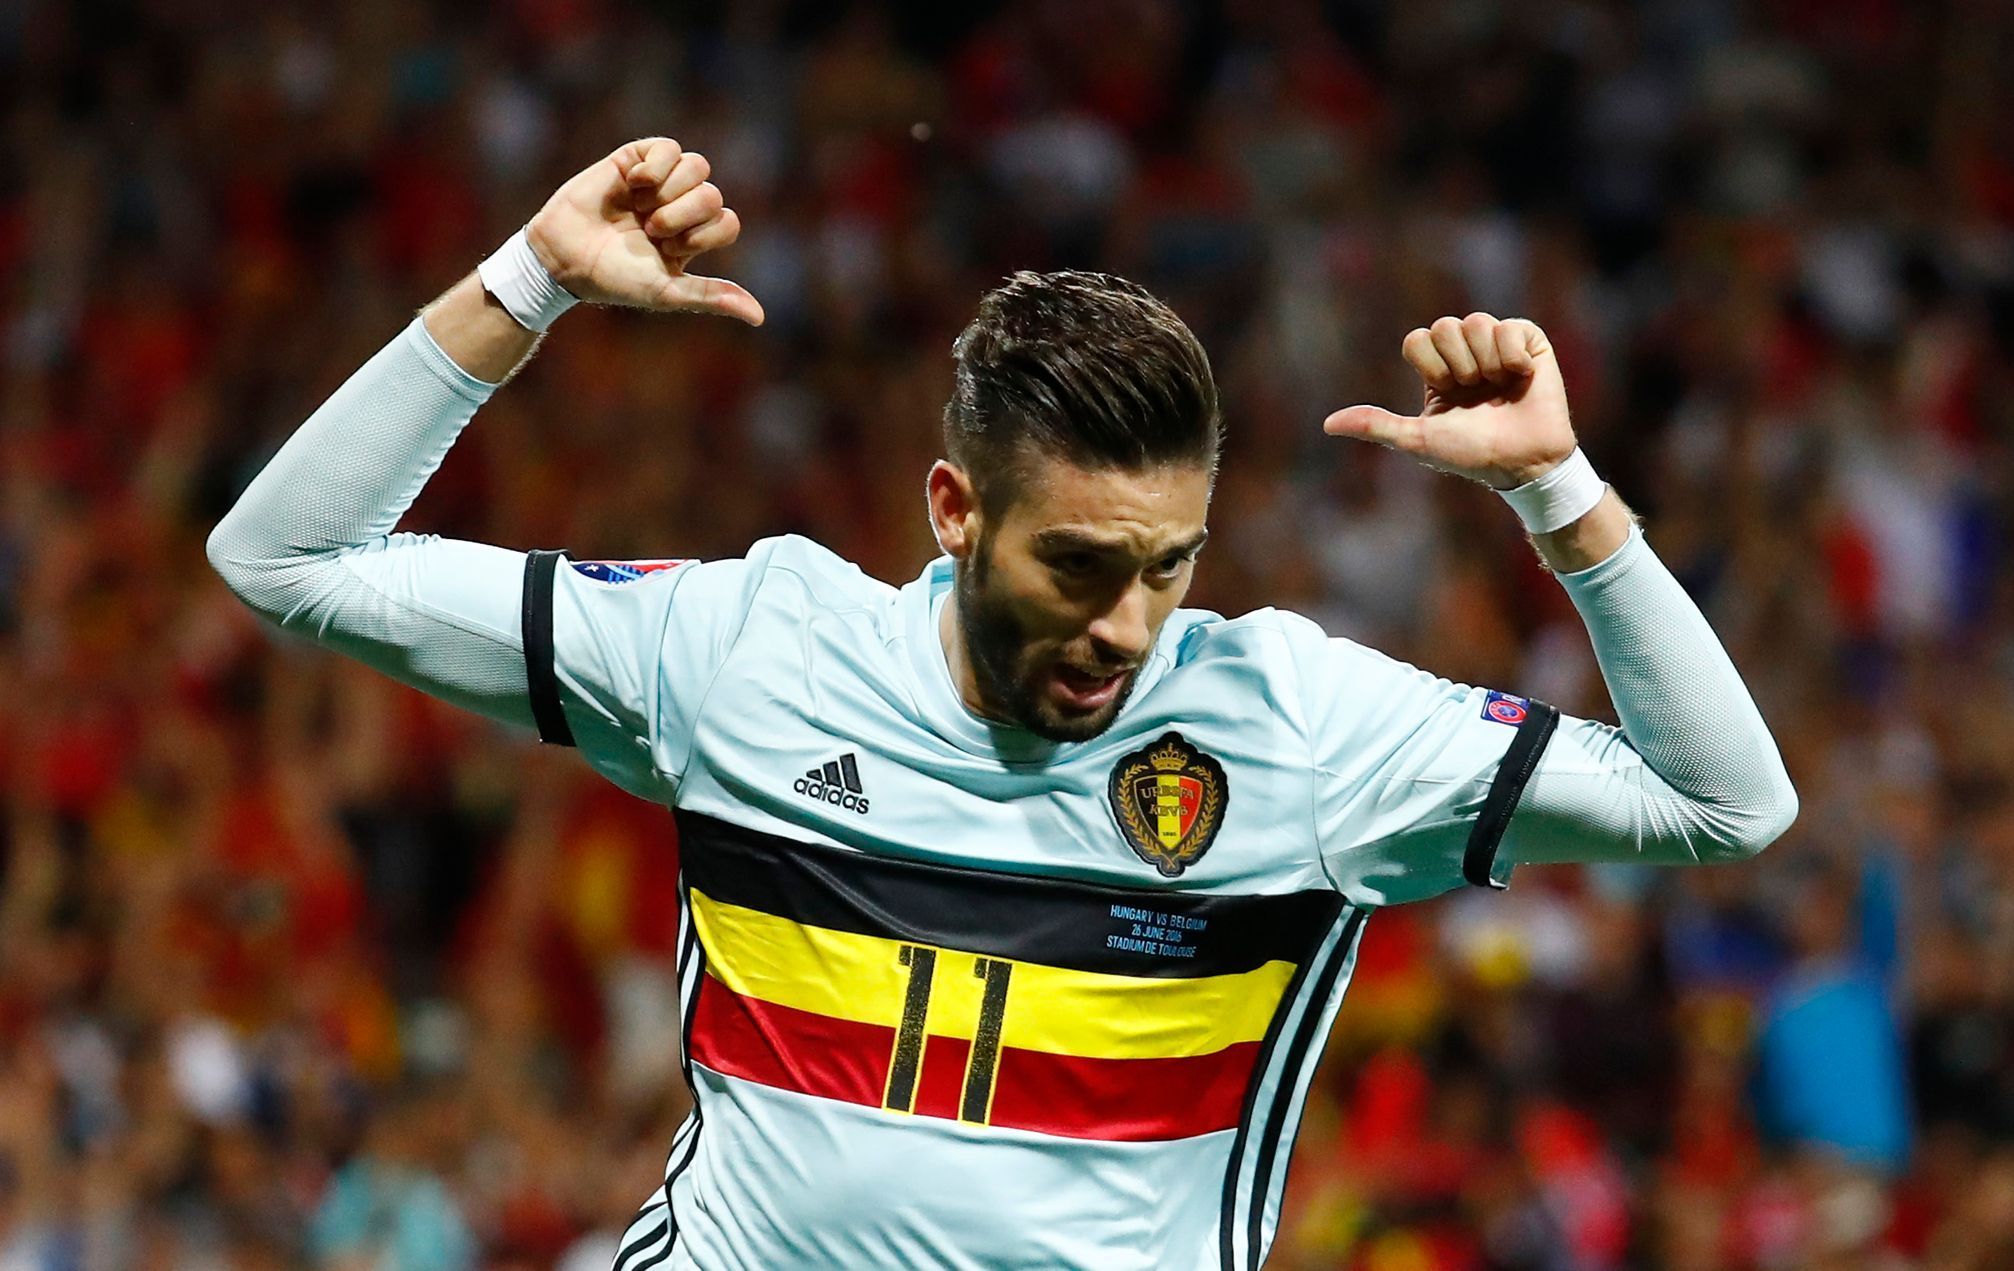 Euro 2016, Belgie-Maďarsko: Yannick Ferreira-Carrasc slaví gól na 4:0